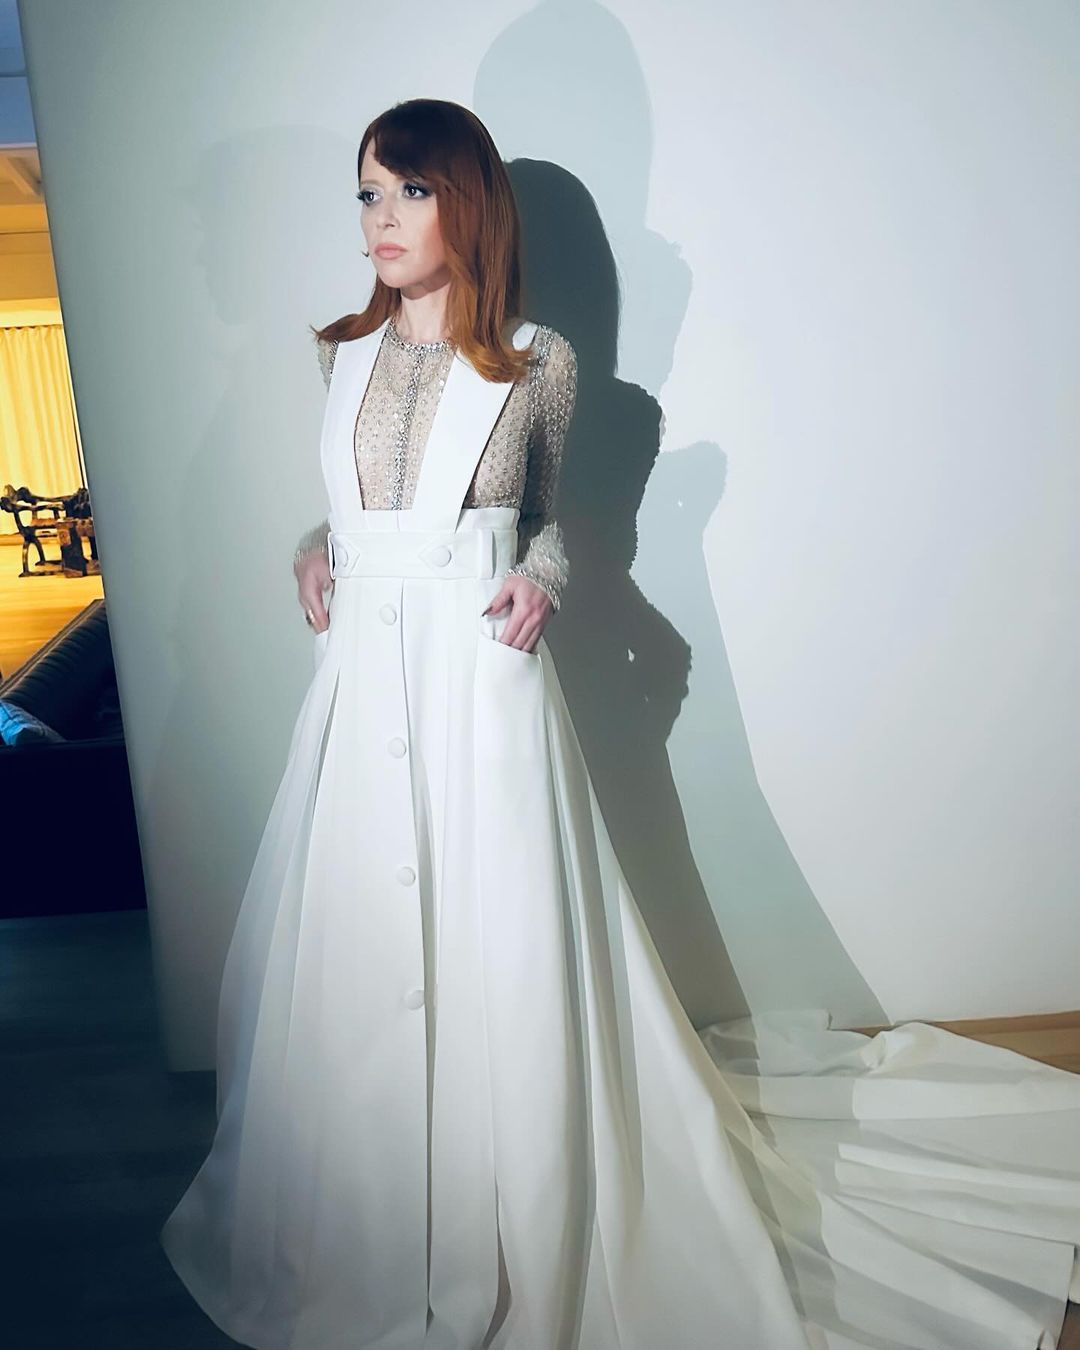 Natasha Lyonne looked elegant in her white Miu Miu gown